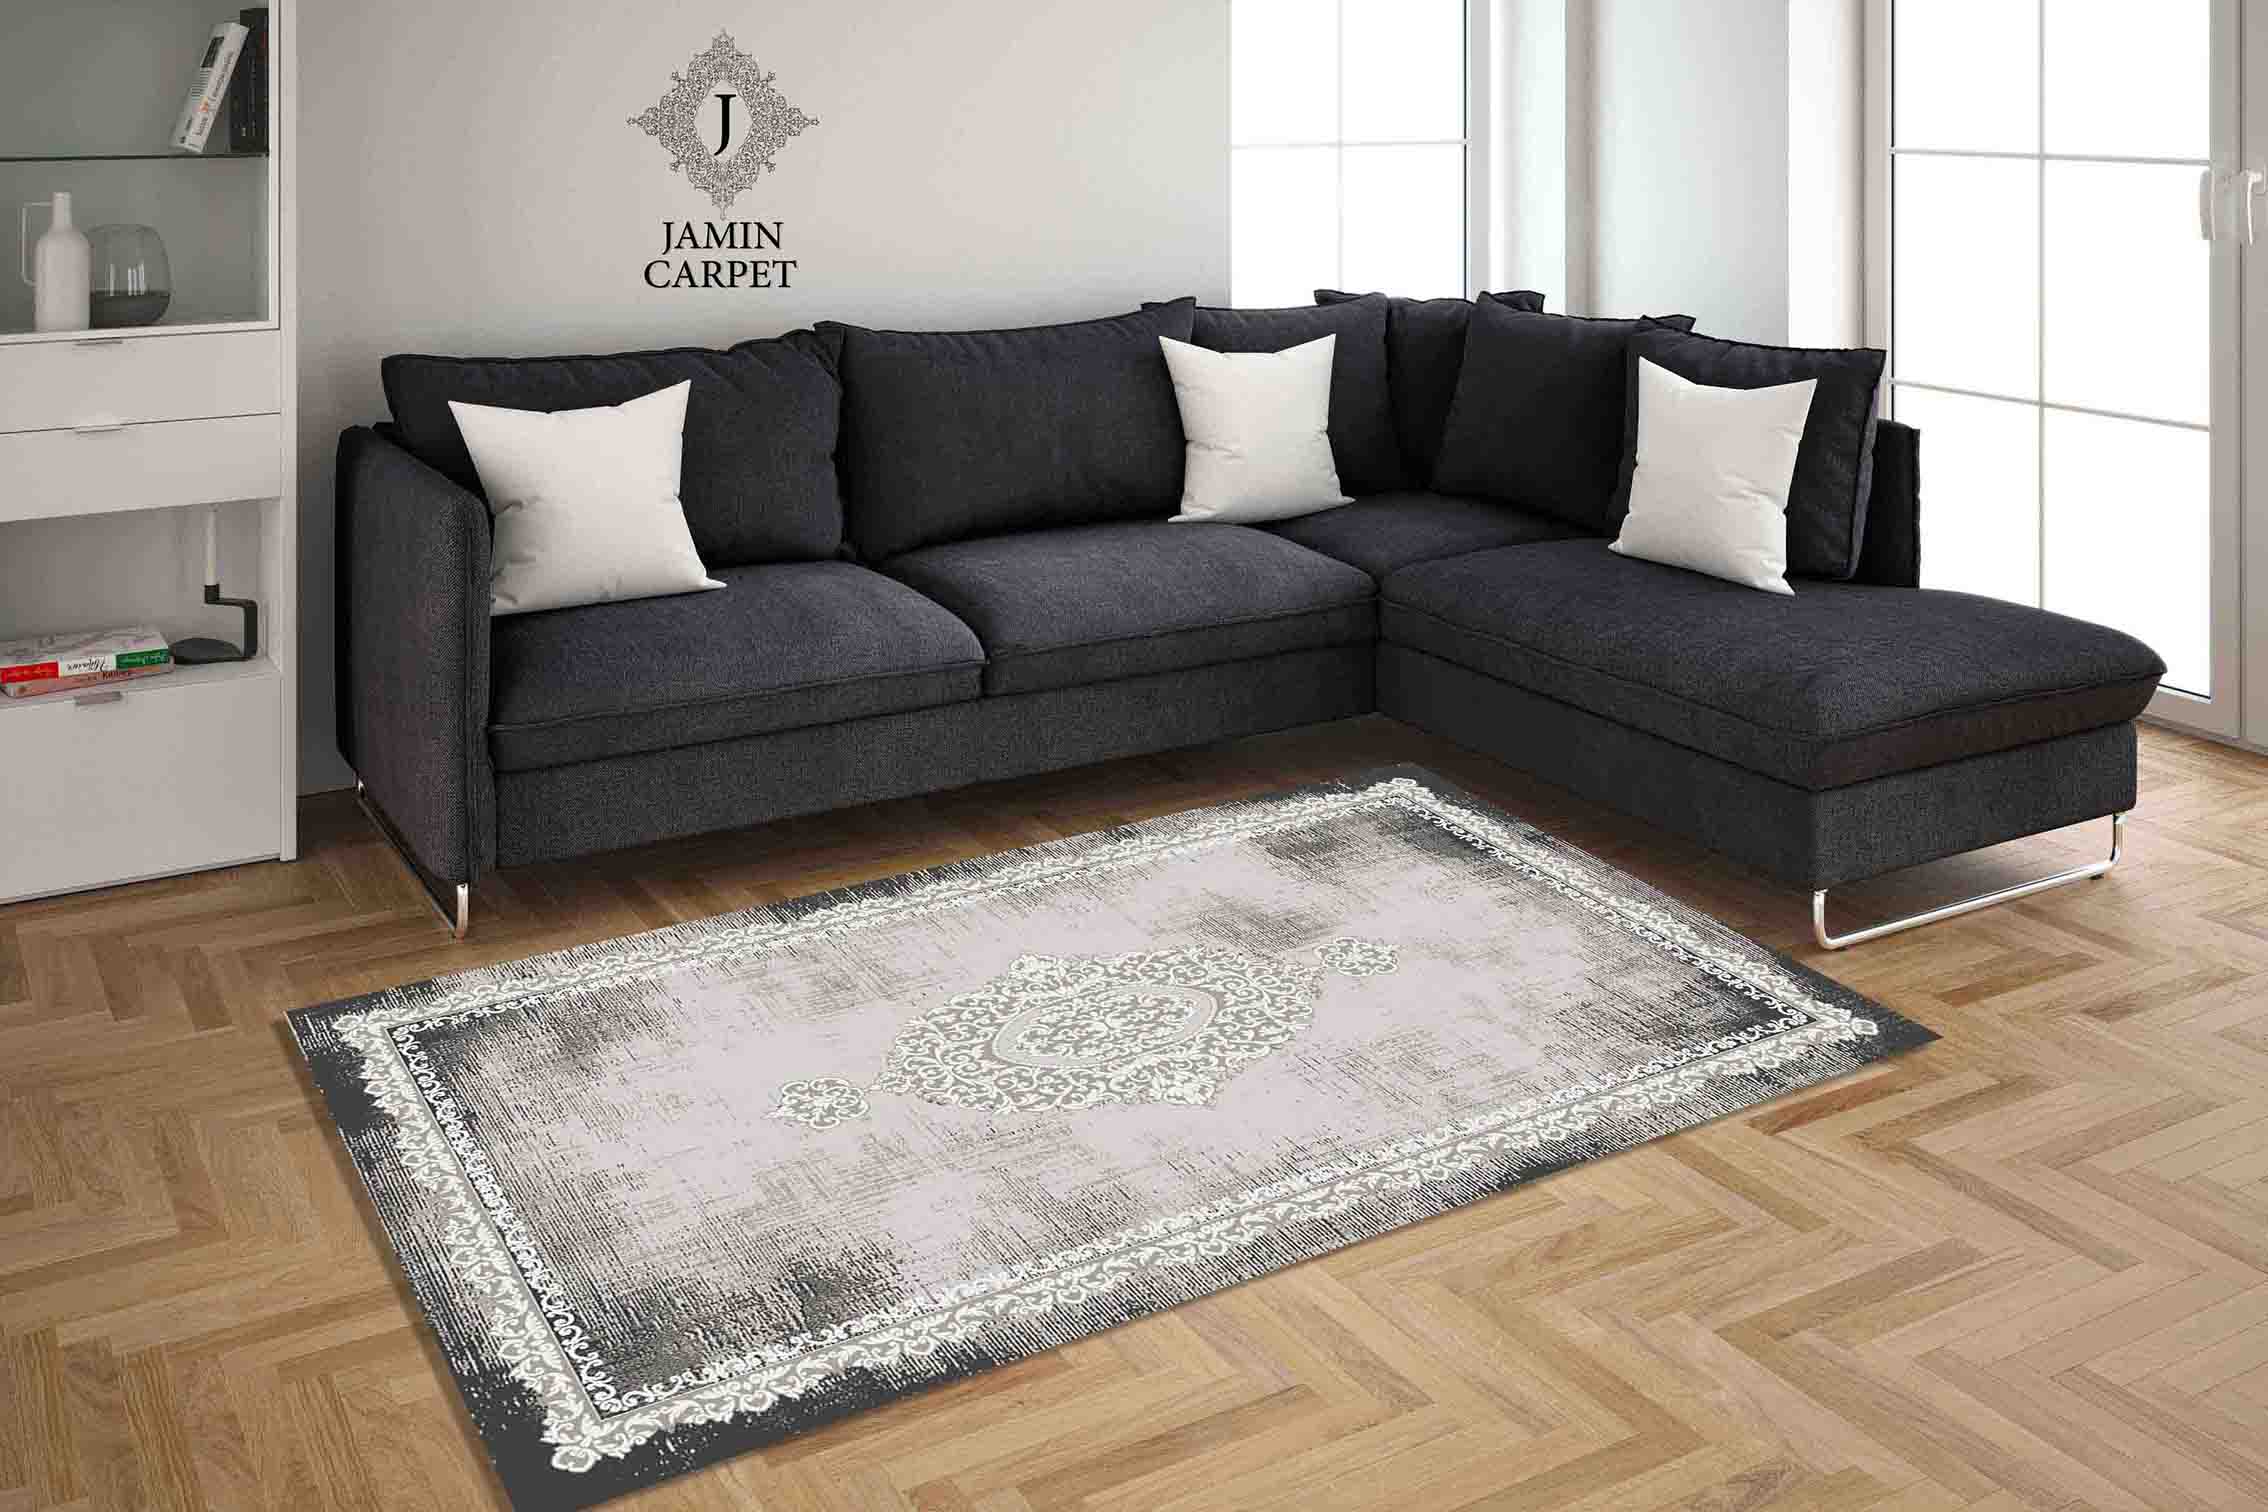 Fantasy carpet, code 258, comb 400, density 1800, all acrylic